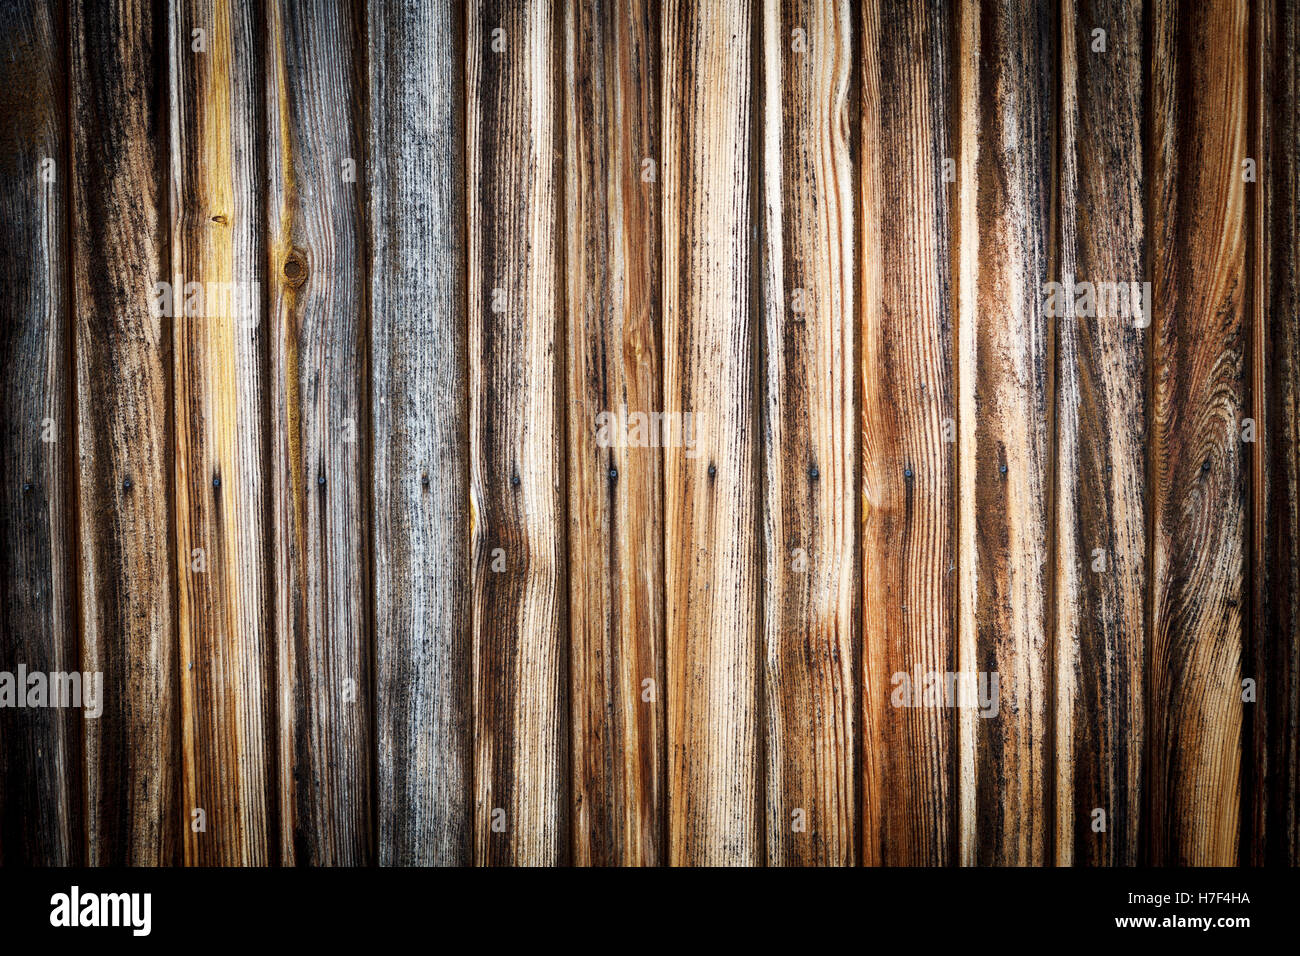 Wooden floor, brown color high contrast background, vertical lines, horizontal orientation,vignette Stock Photo